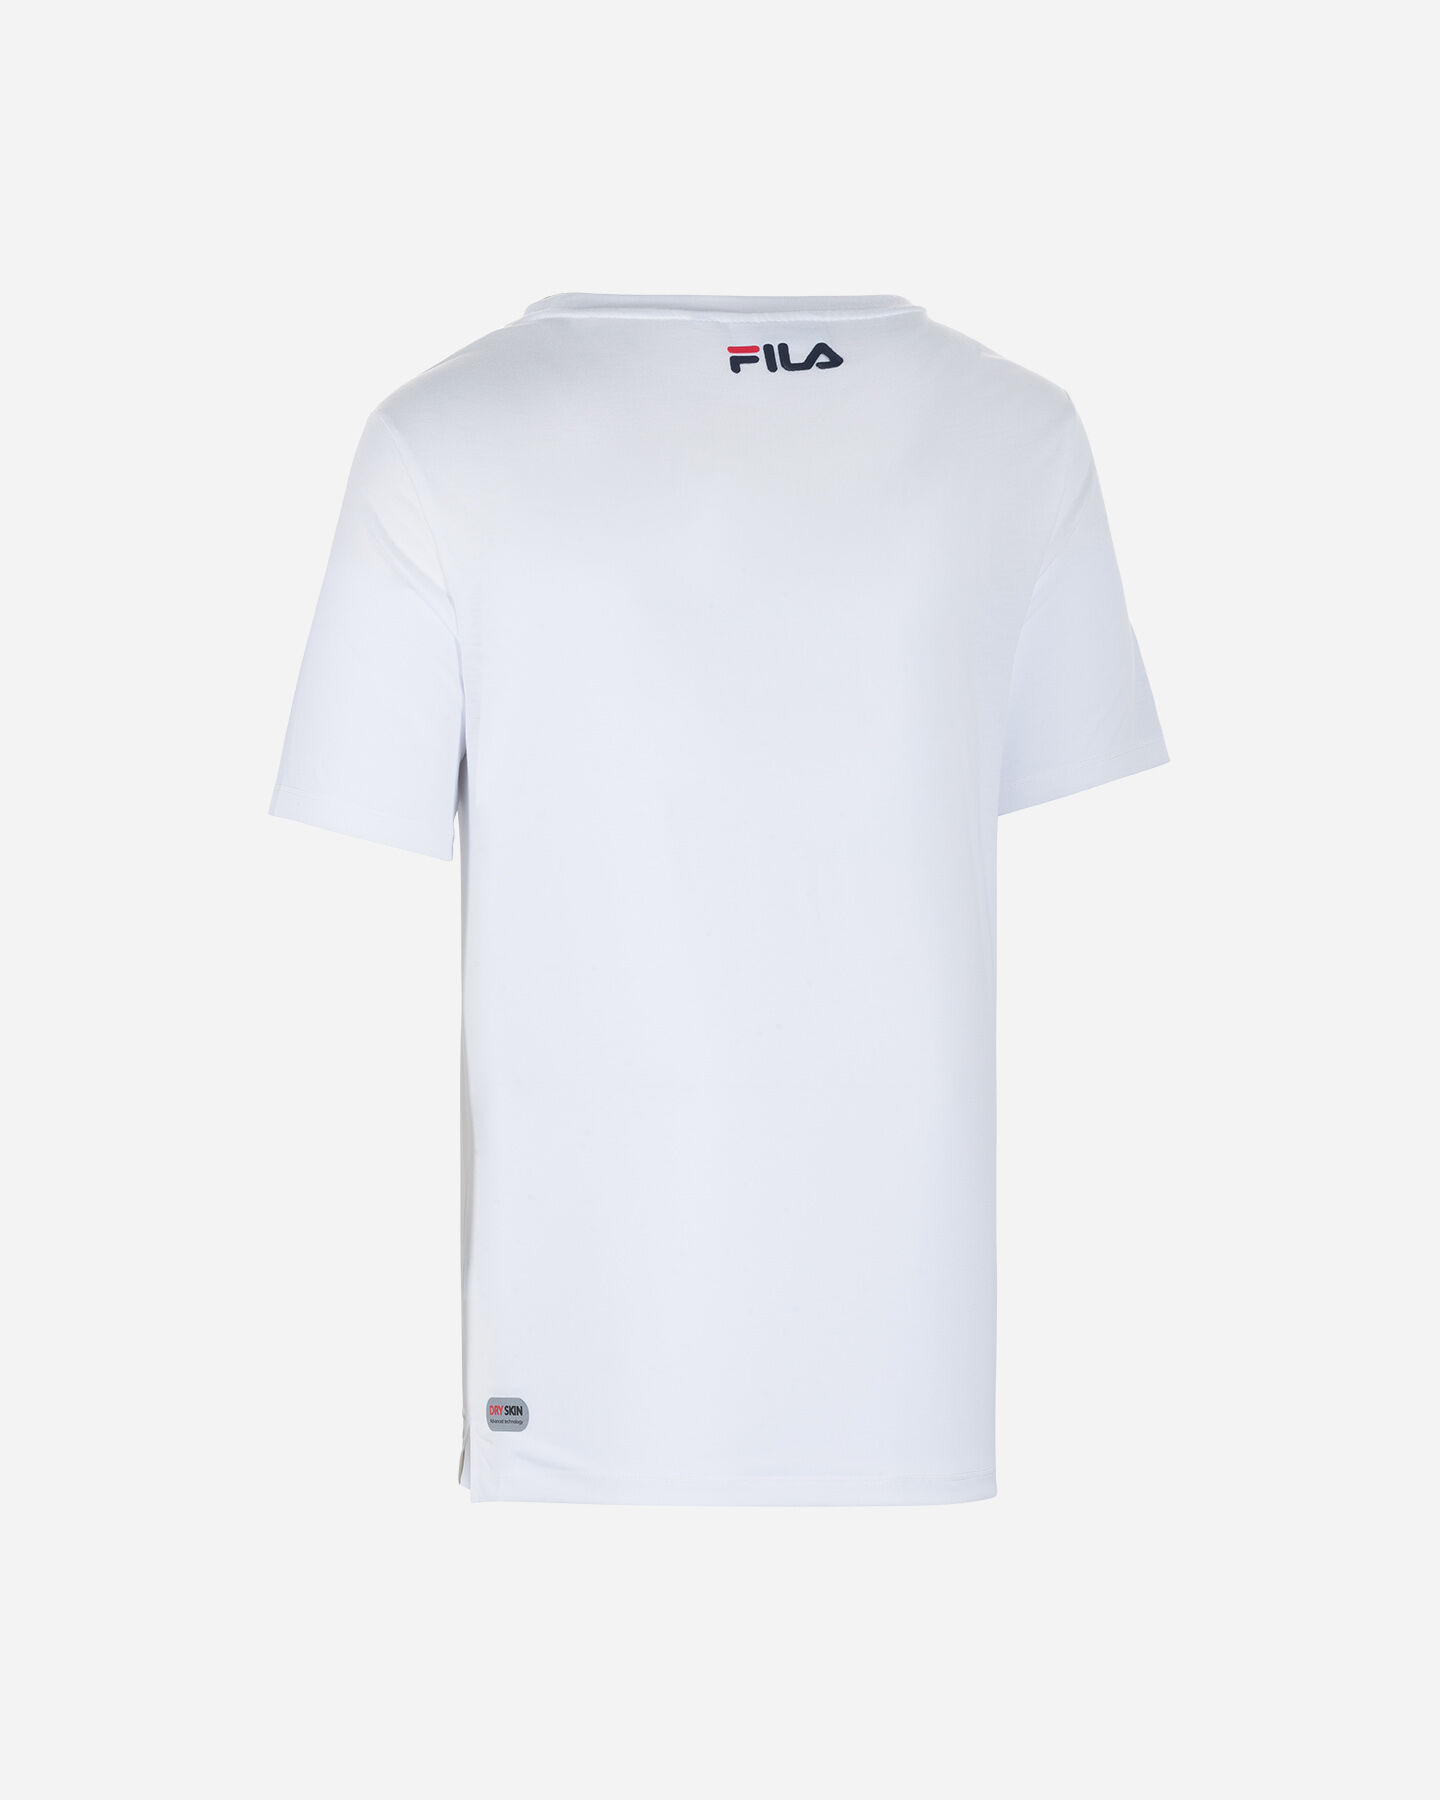  T-Shirt tennis FILA TENNIS BIG LOGO M S4075792|001|S scatto 1